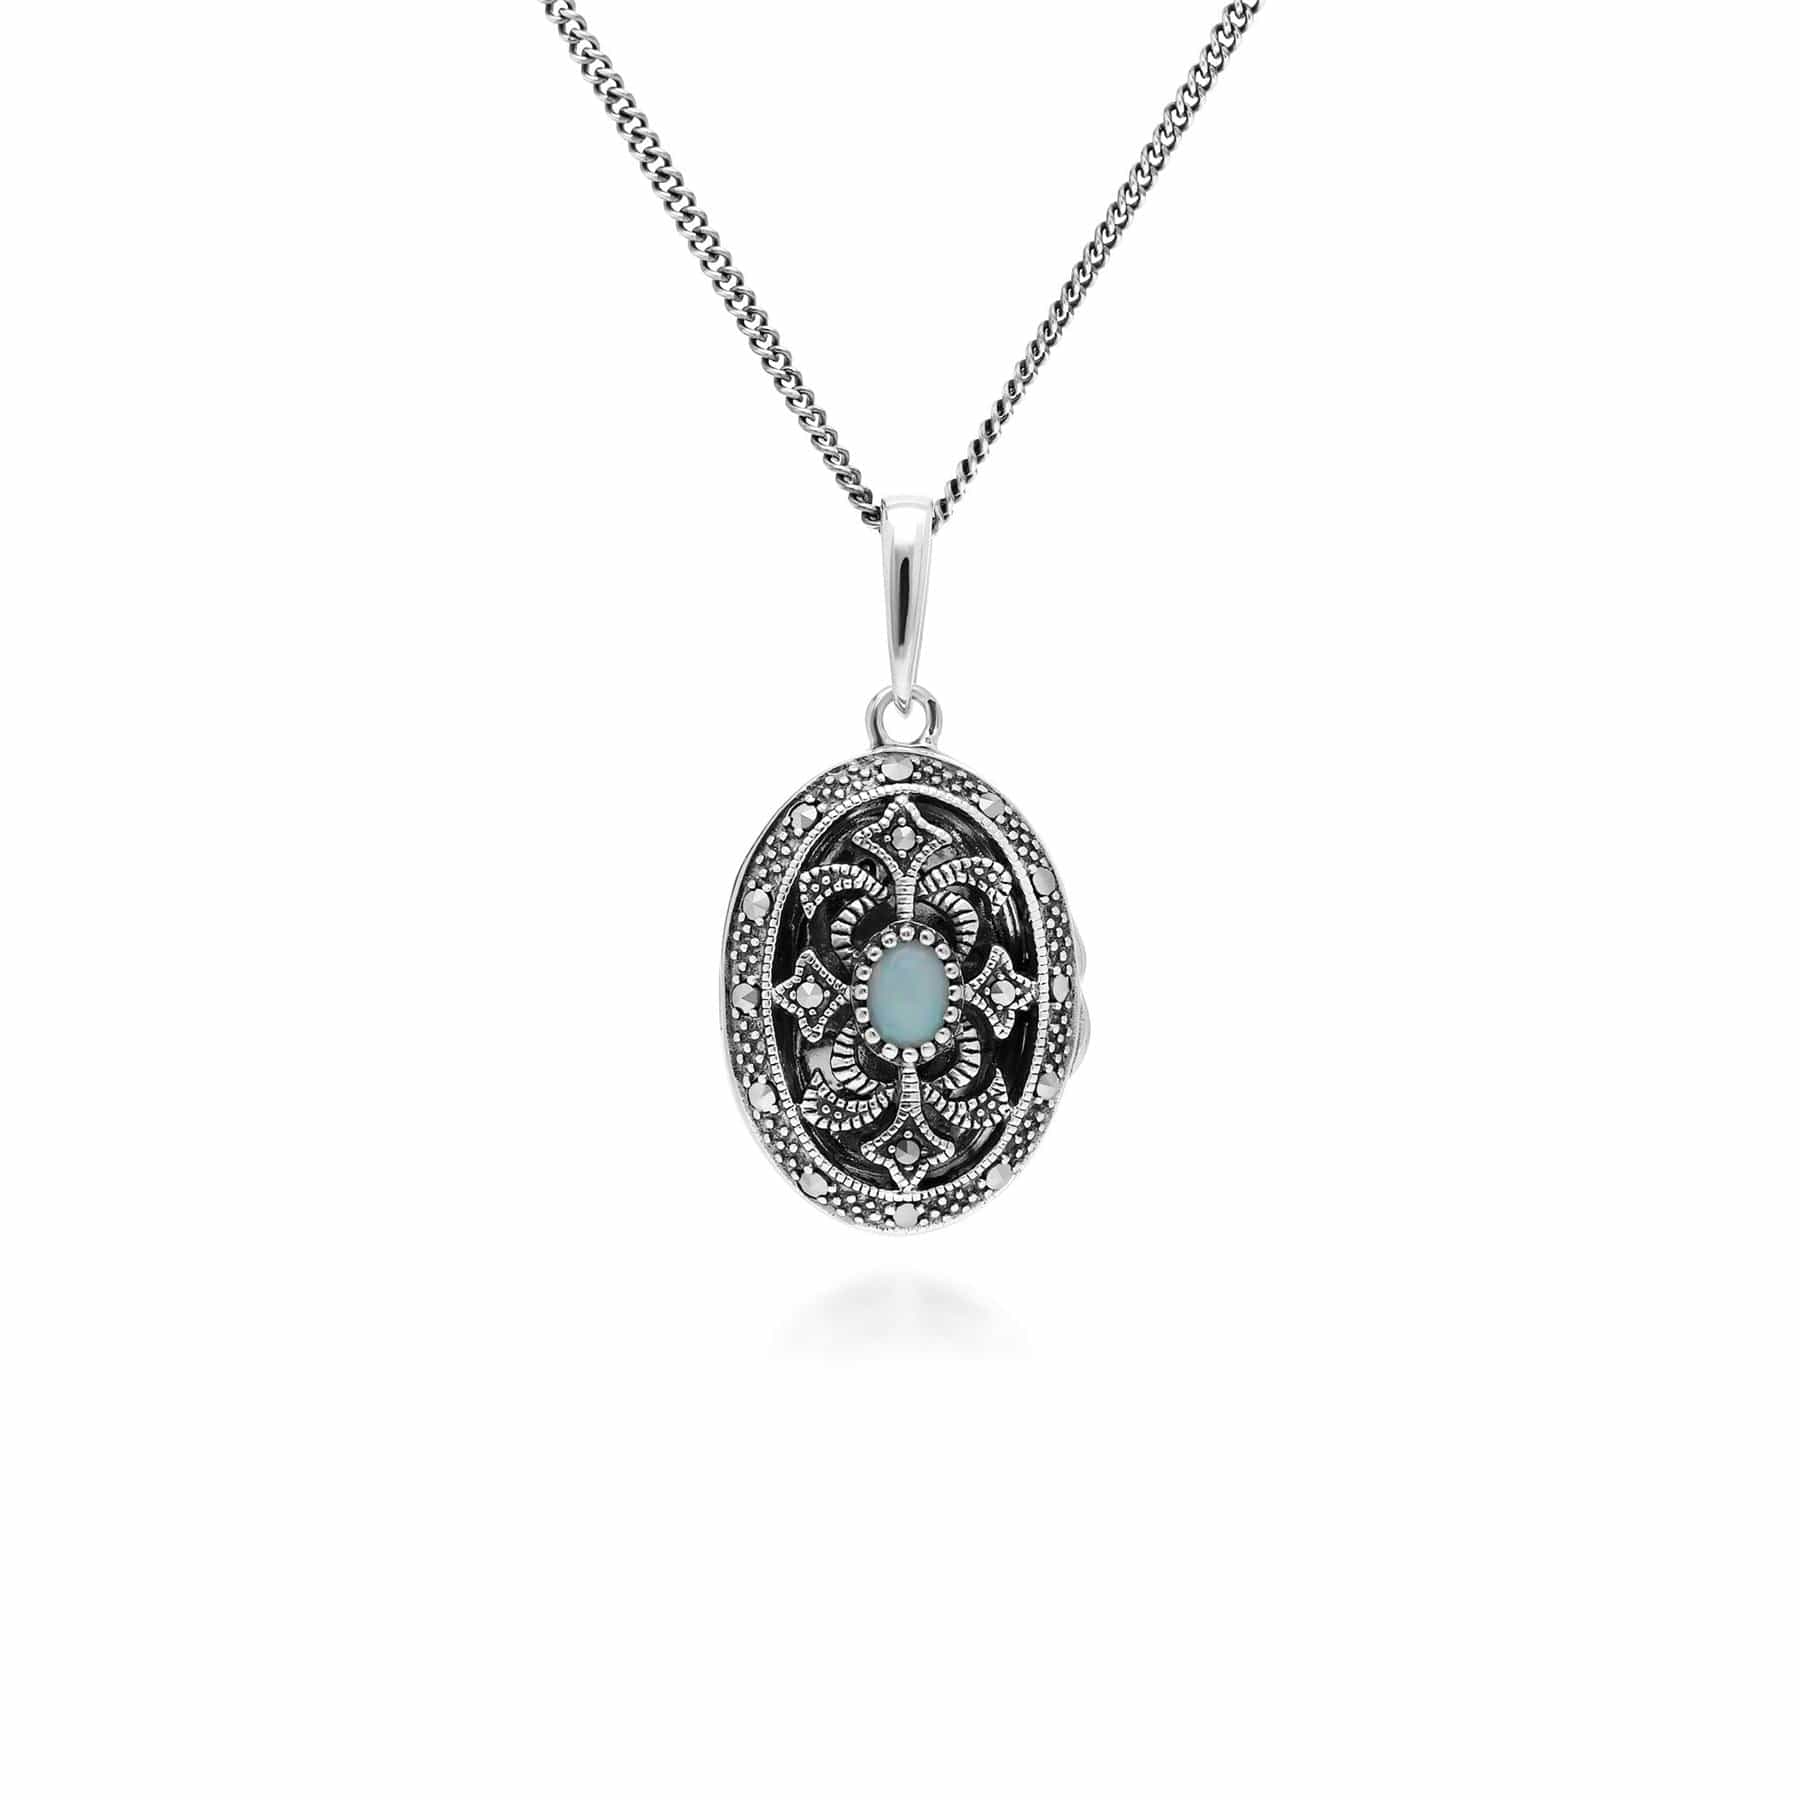 214N716212925 Art Nouveau Style Oval Opal & Marcasite Locket Necklace in 925 Sterling Silver 1